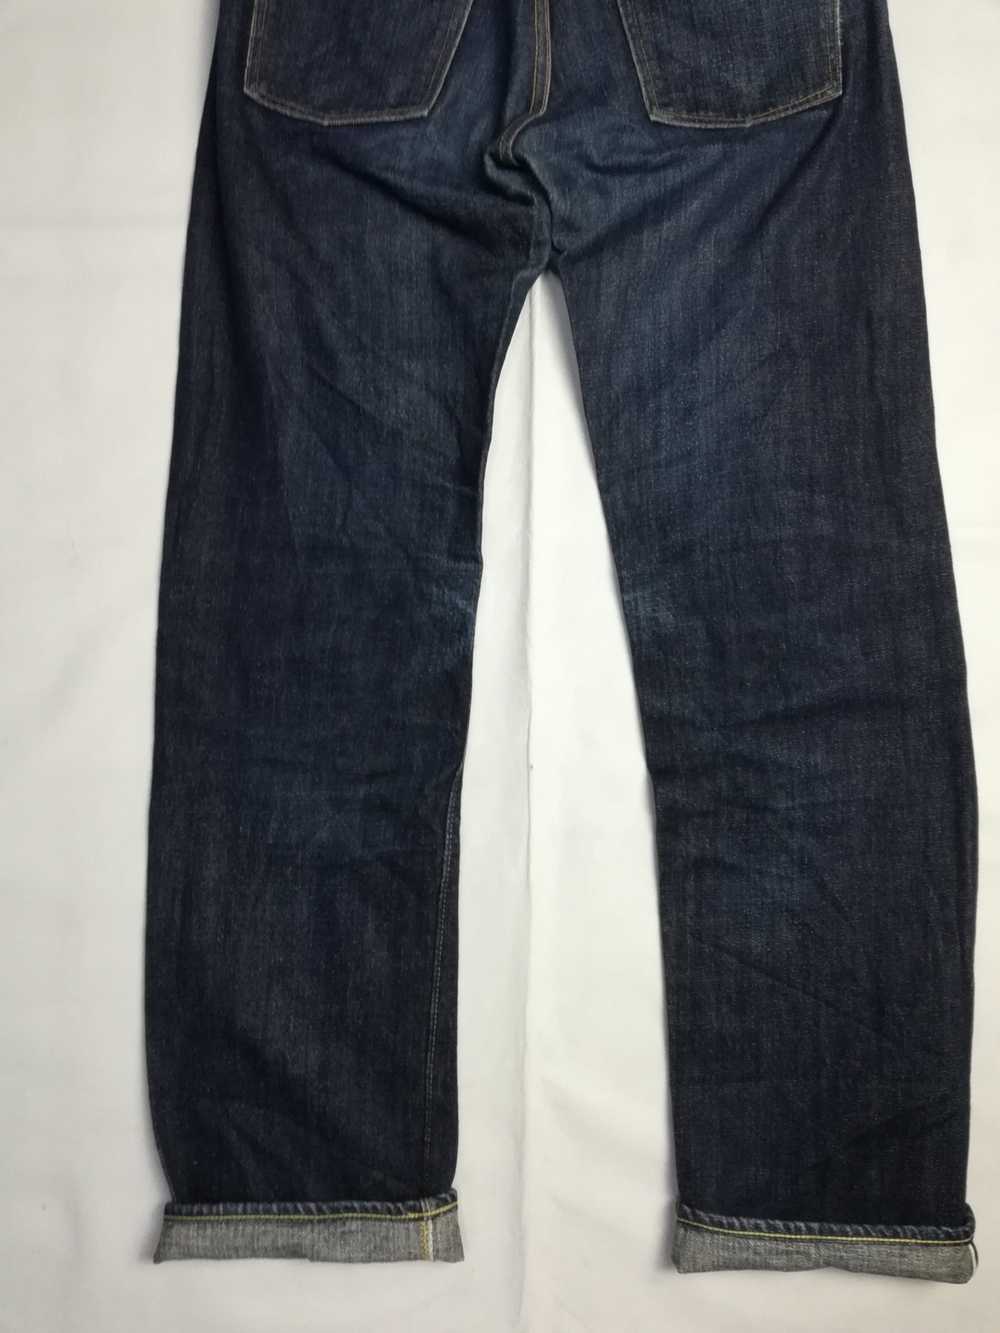 Orslow Orslow Selvedge Denim Jeans - image 9